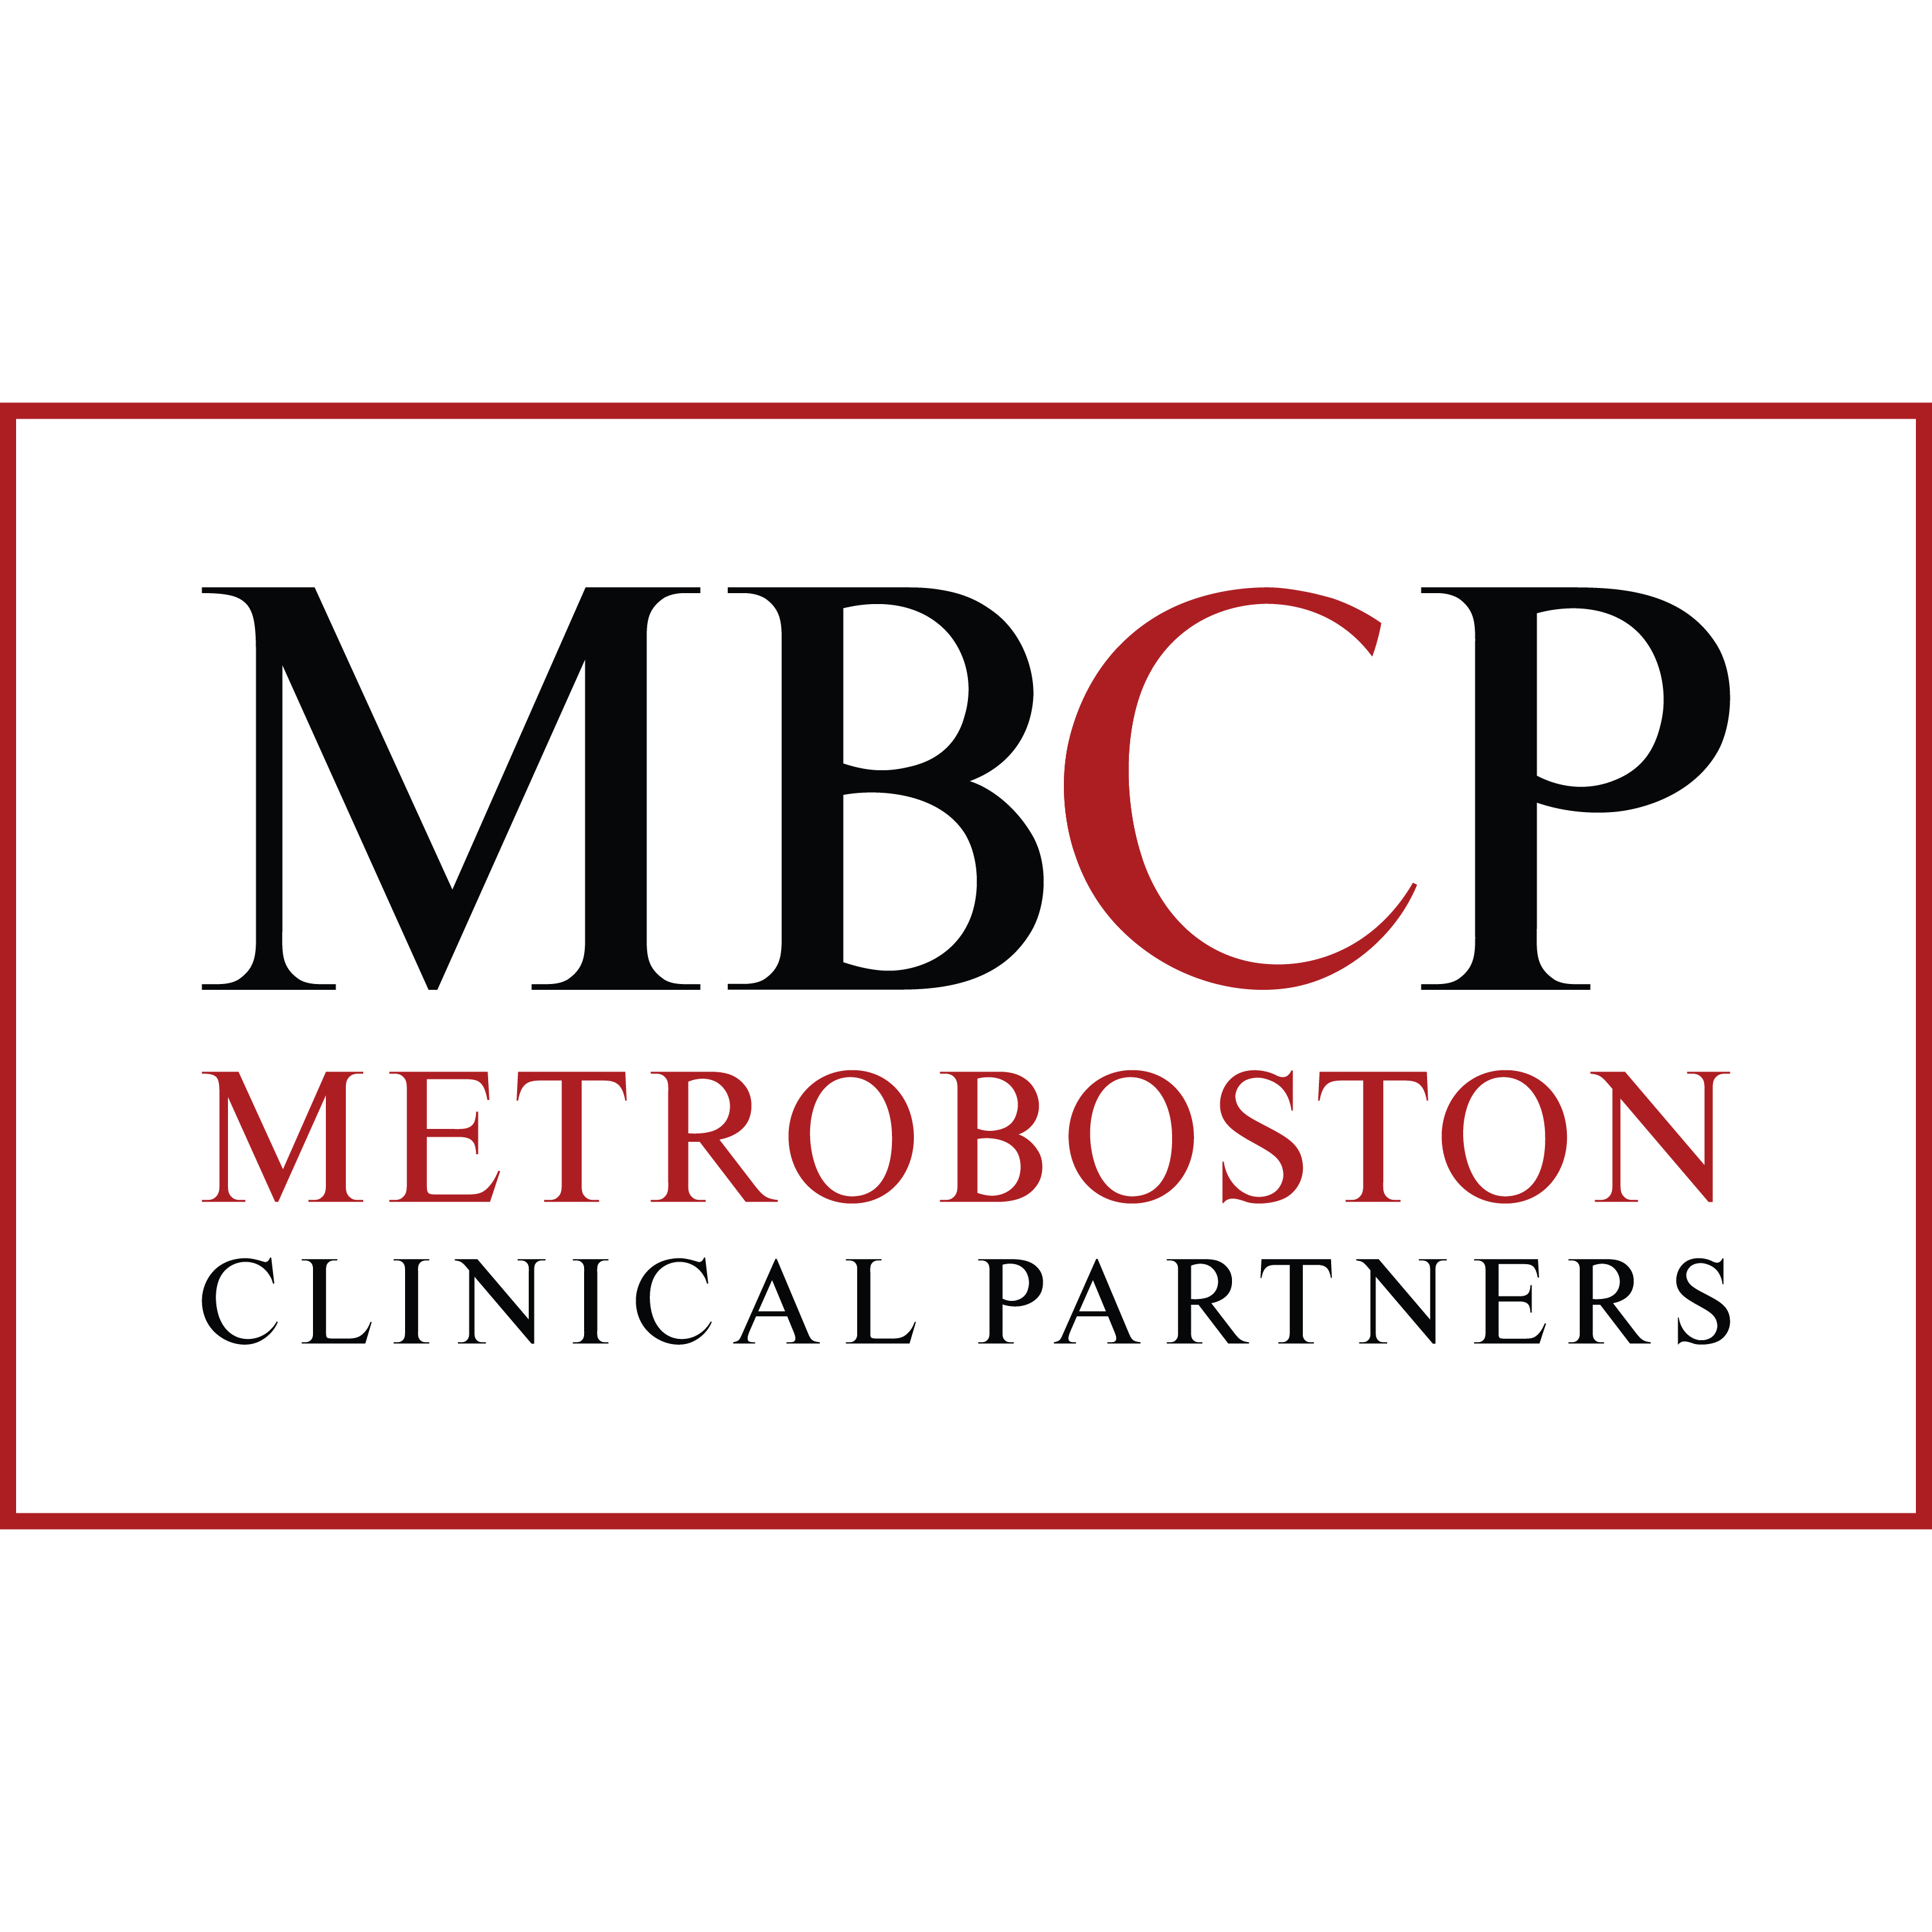 Metro Boston Clinical Partners